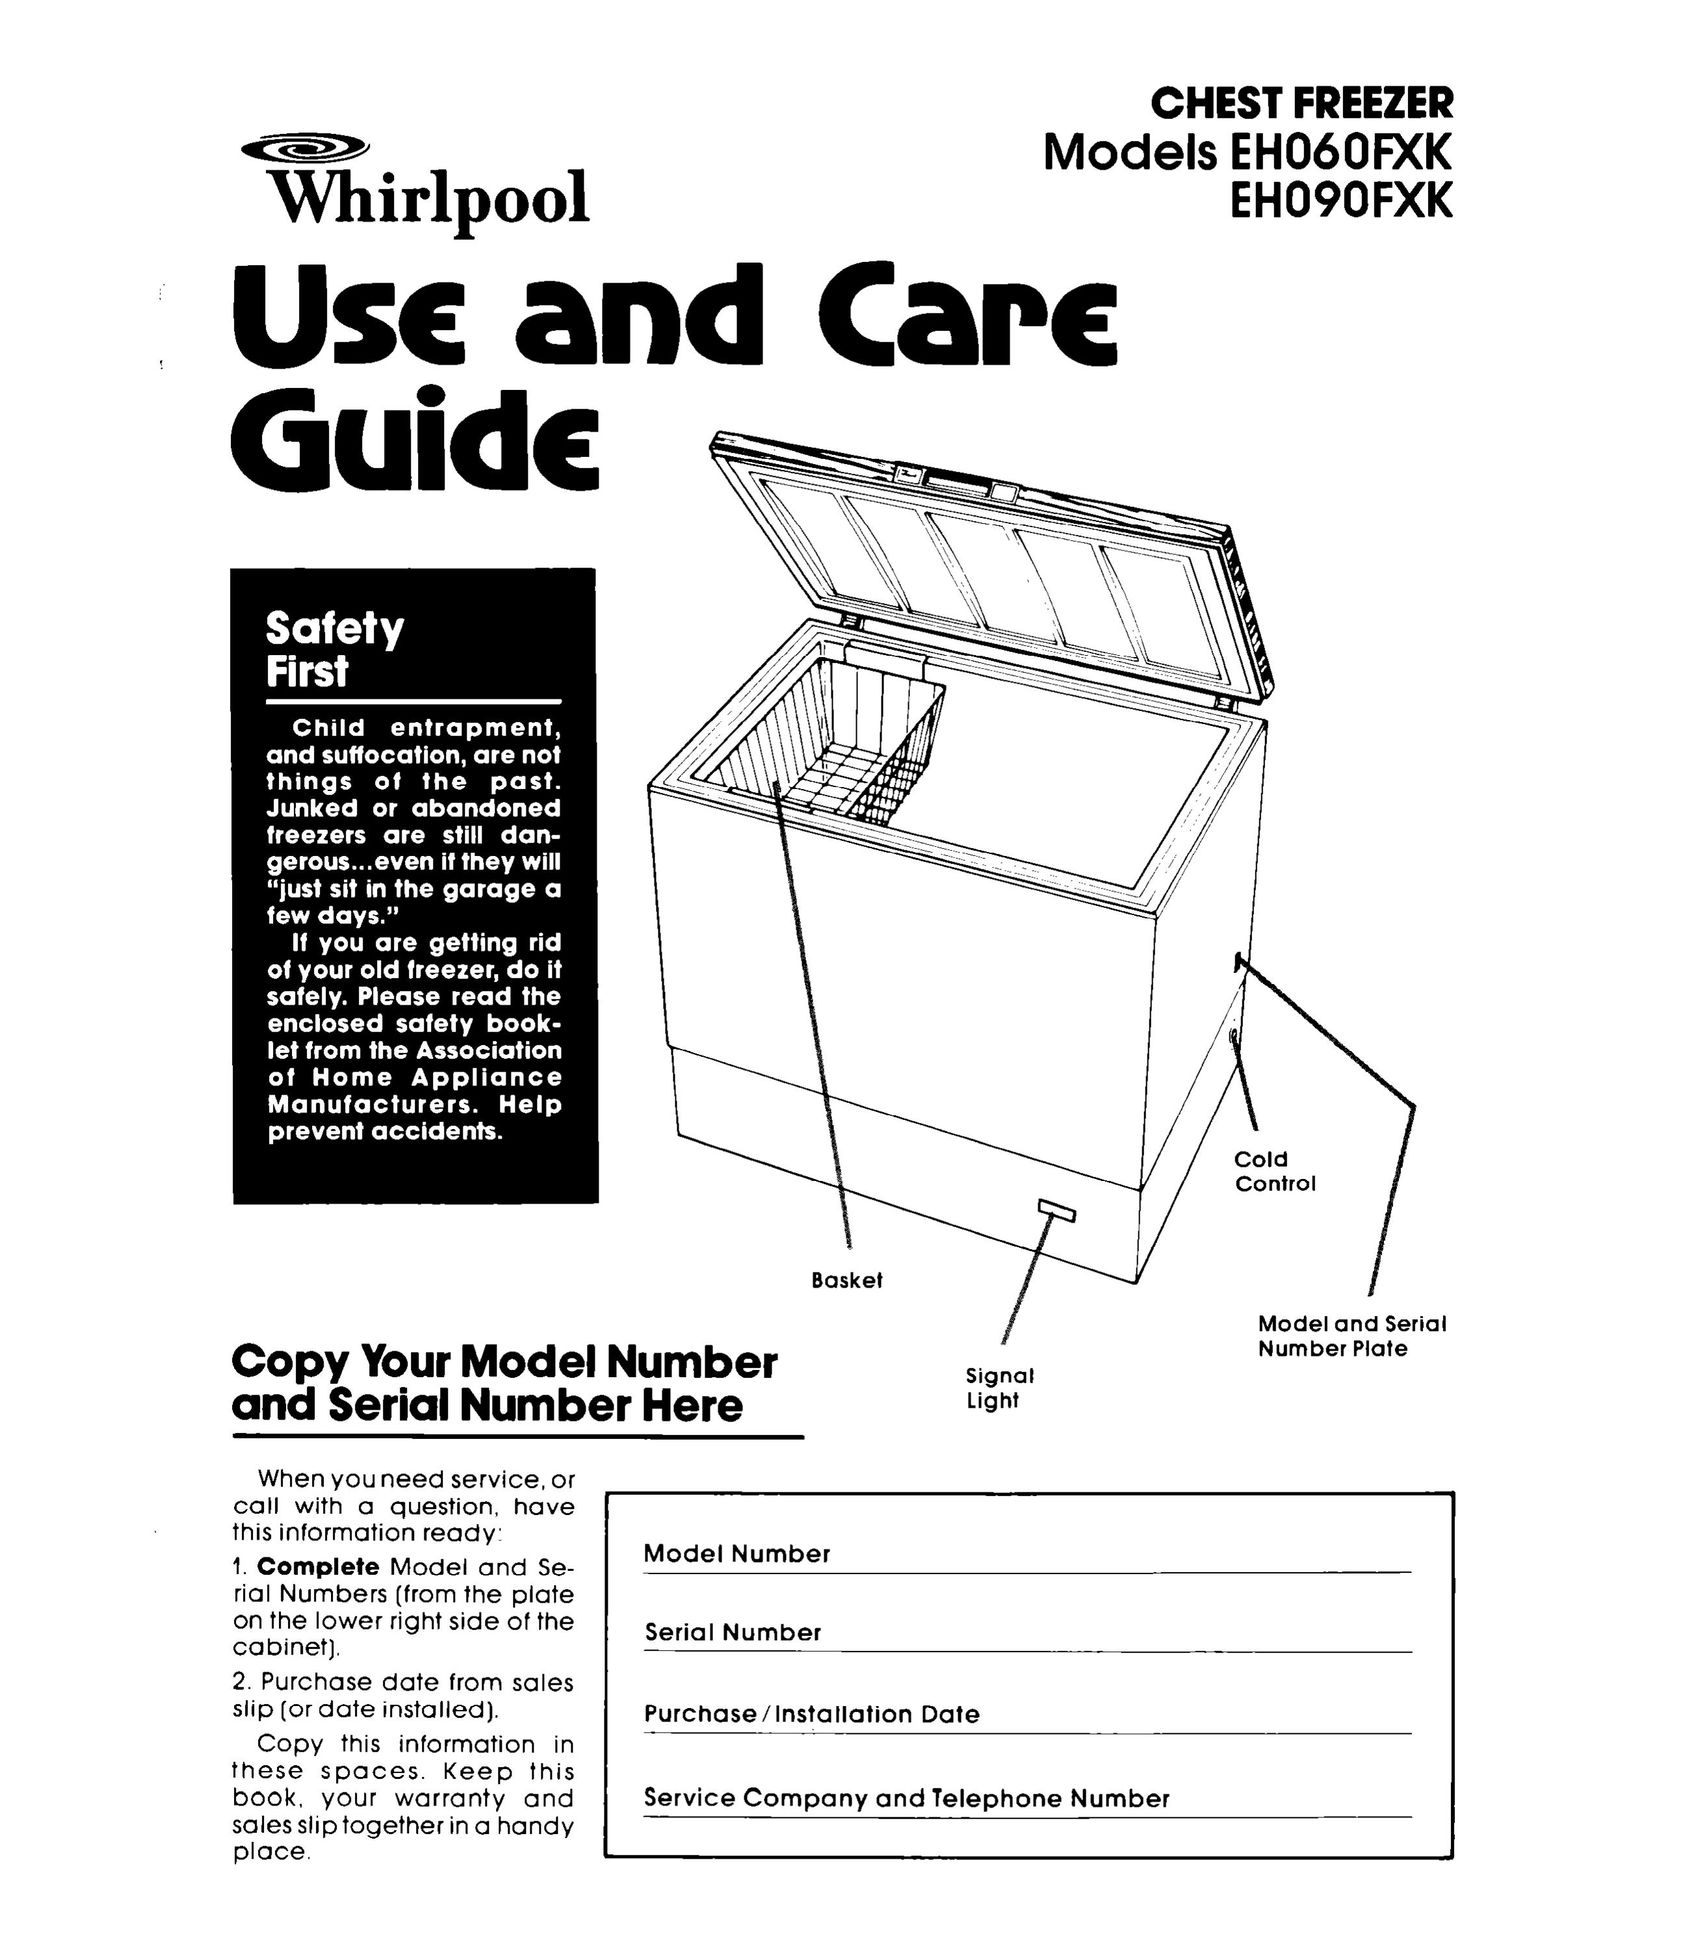 Whirlpool EH090FXK Freezer User Manual (Page 1)